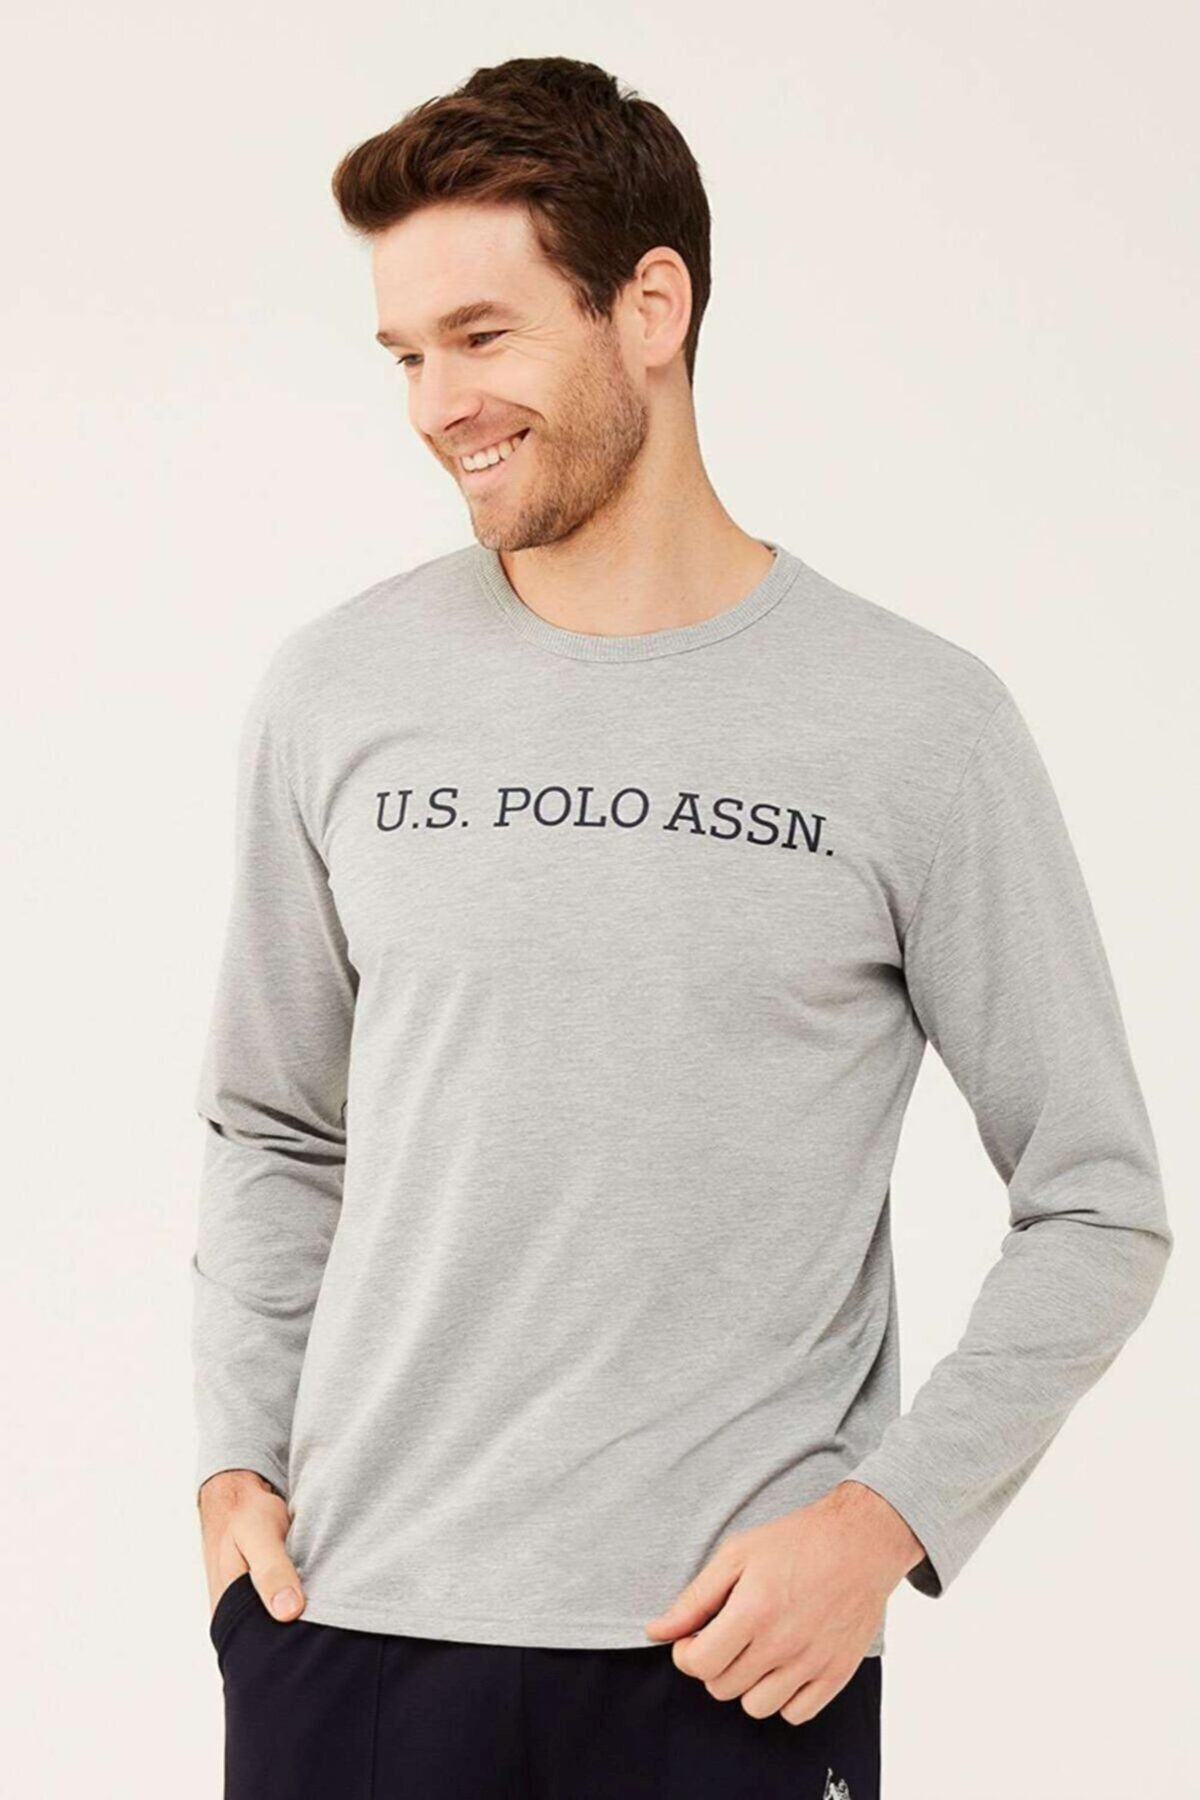 U.S. Polo Assn. Erkek Gri Melanj Uzun Kollu T-shirt 18467